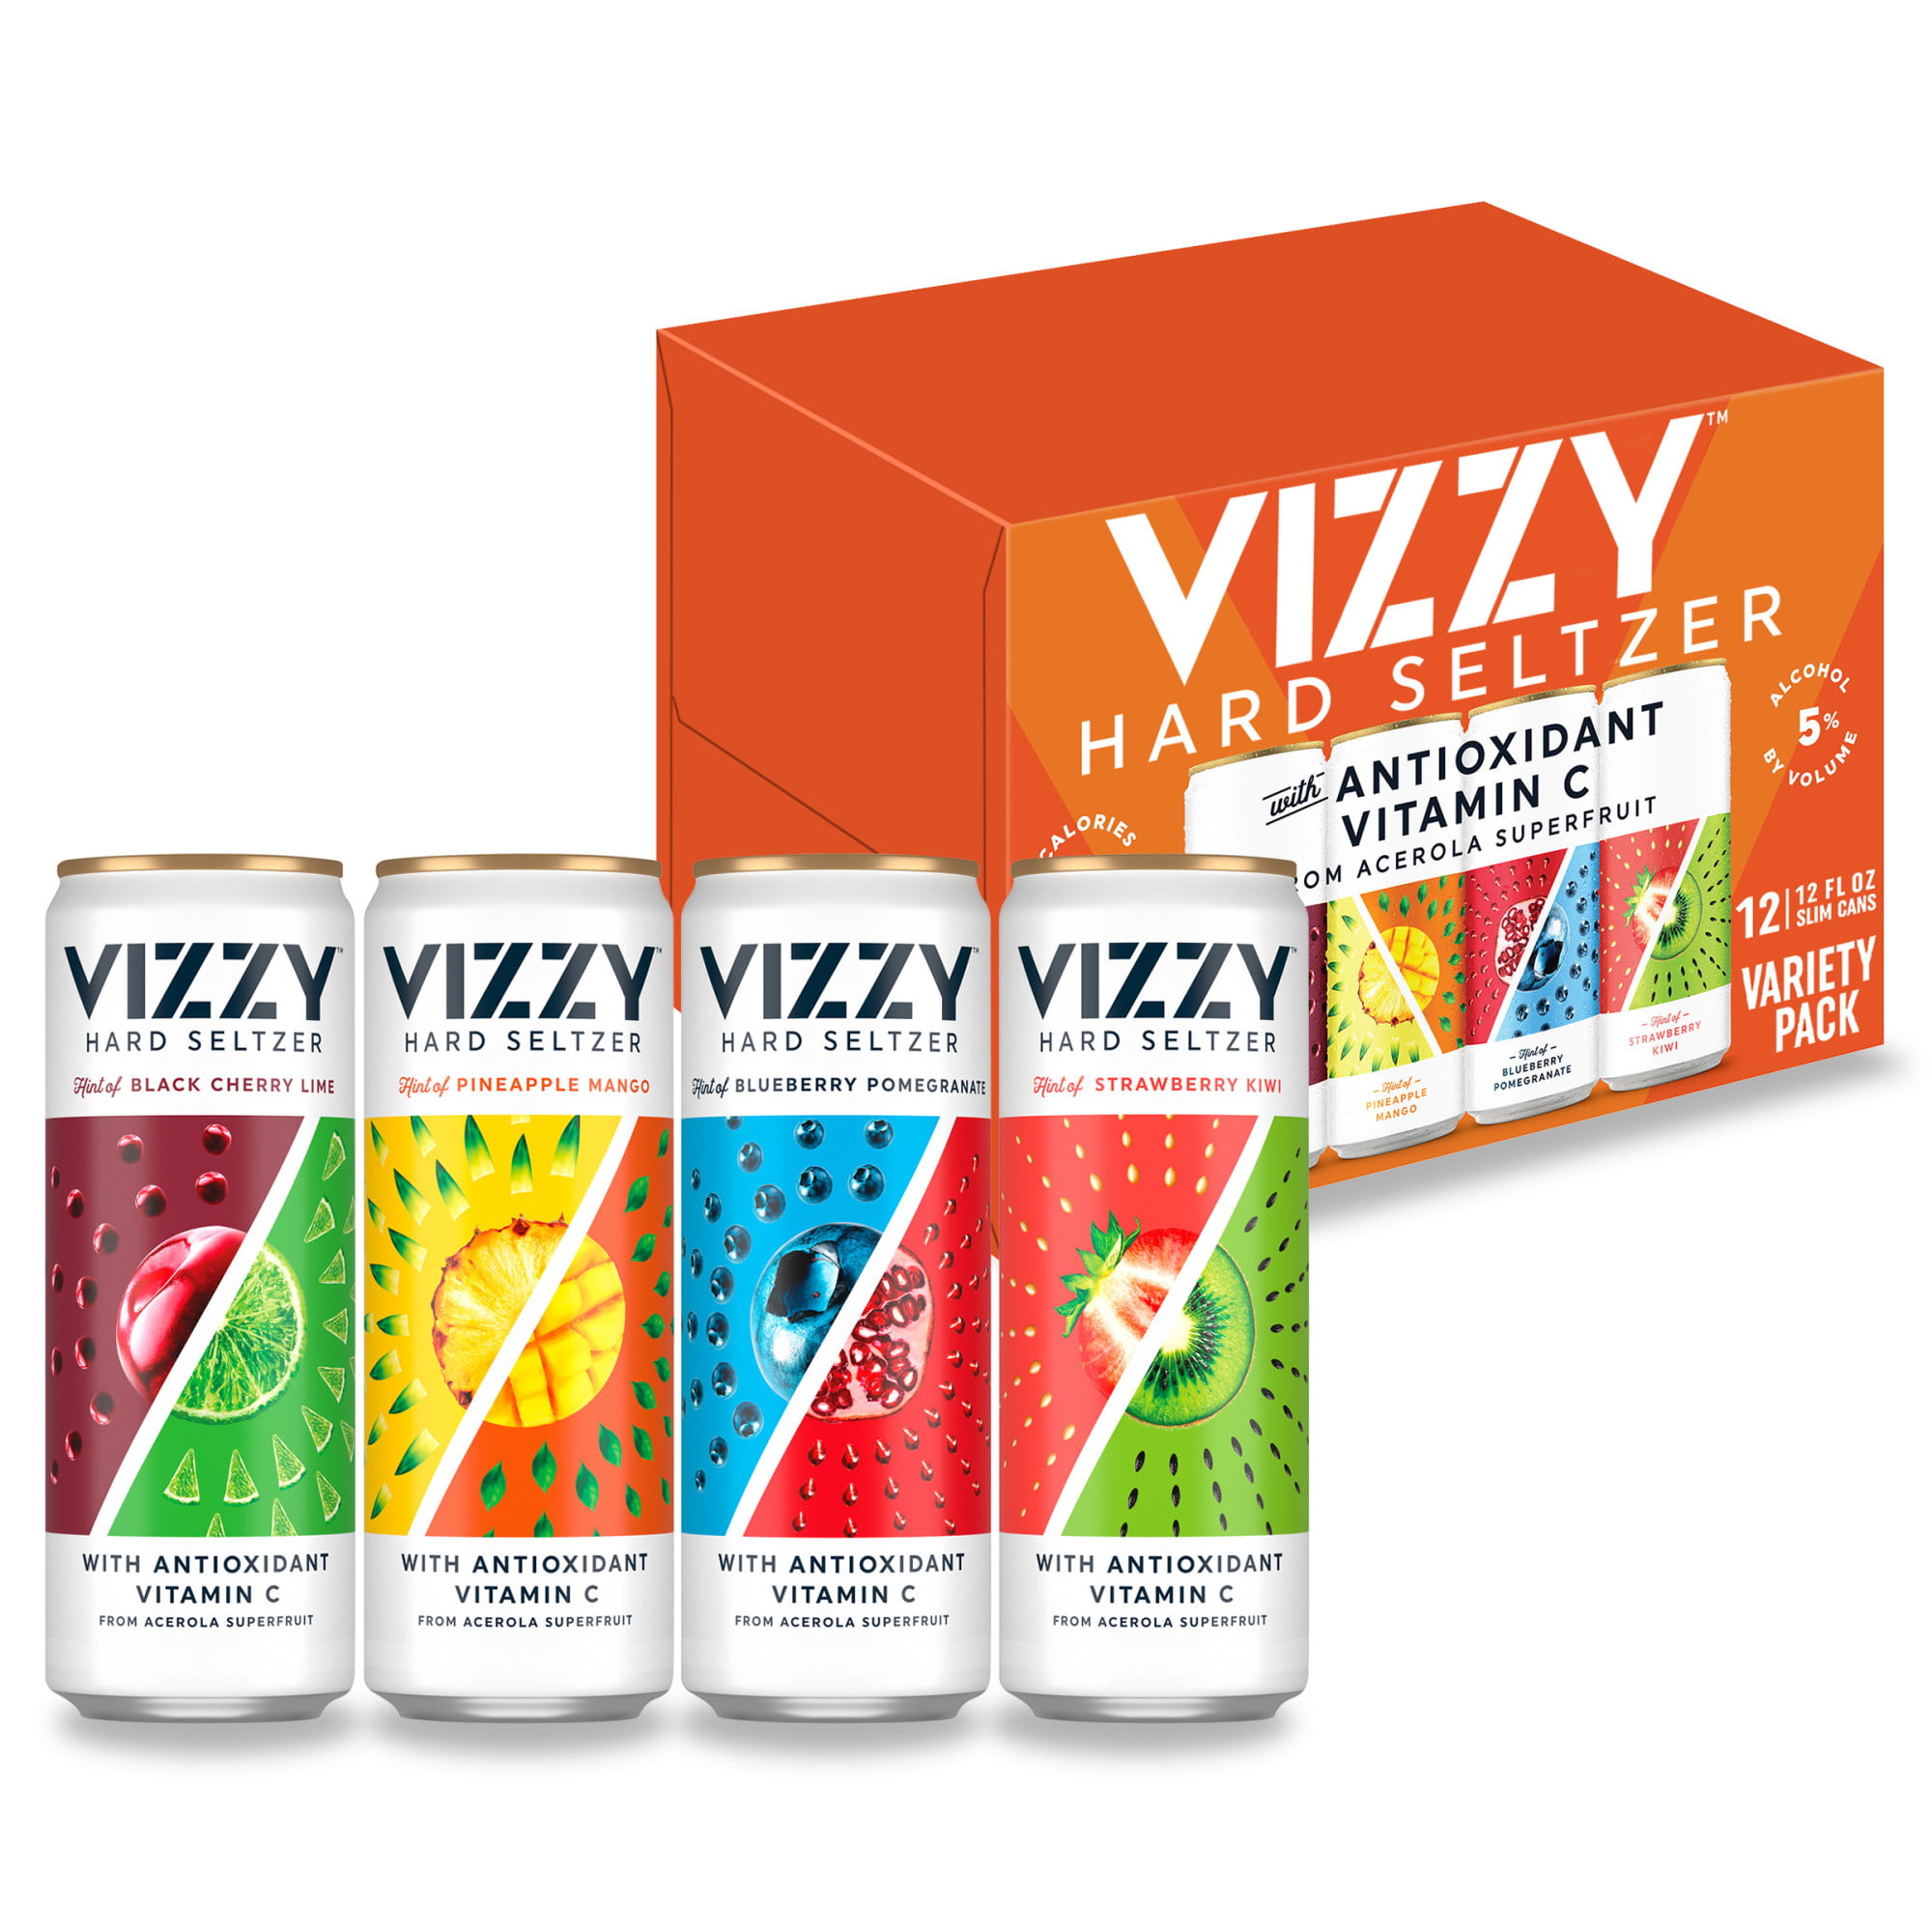 vizzy-variety-pack-ubicaciondepersonas-cdmx-gob-mx